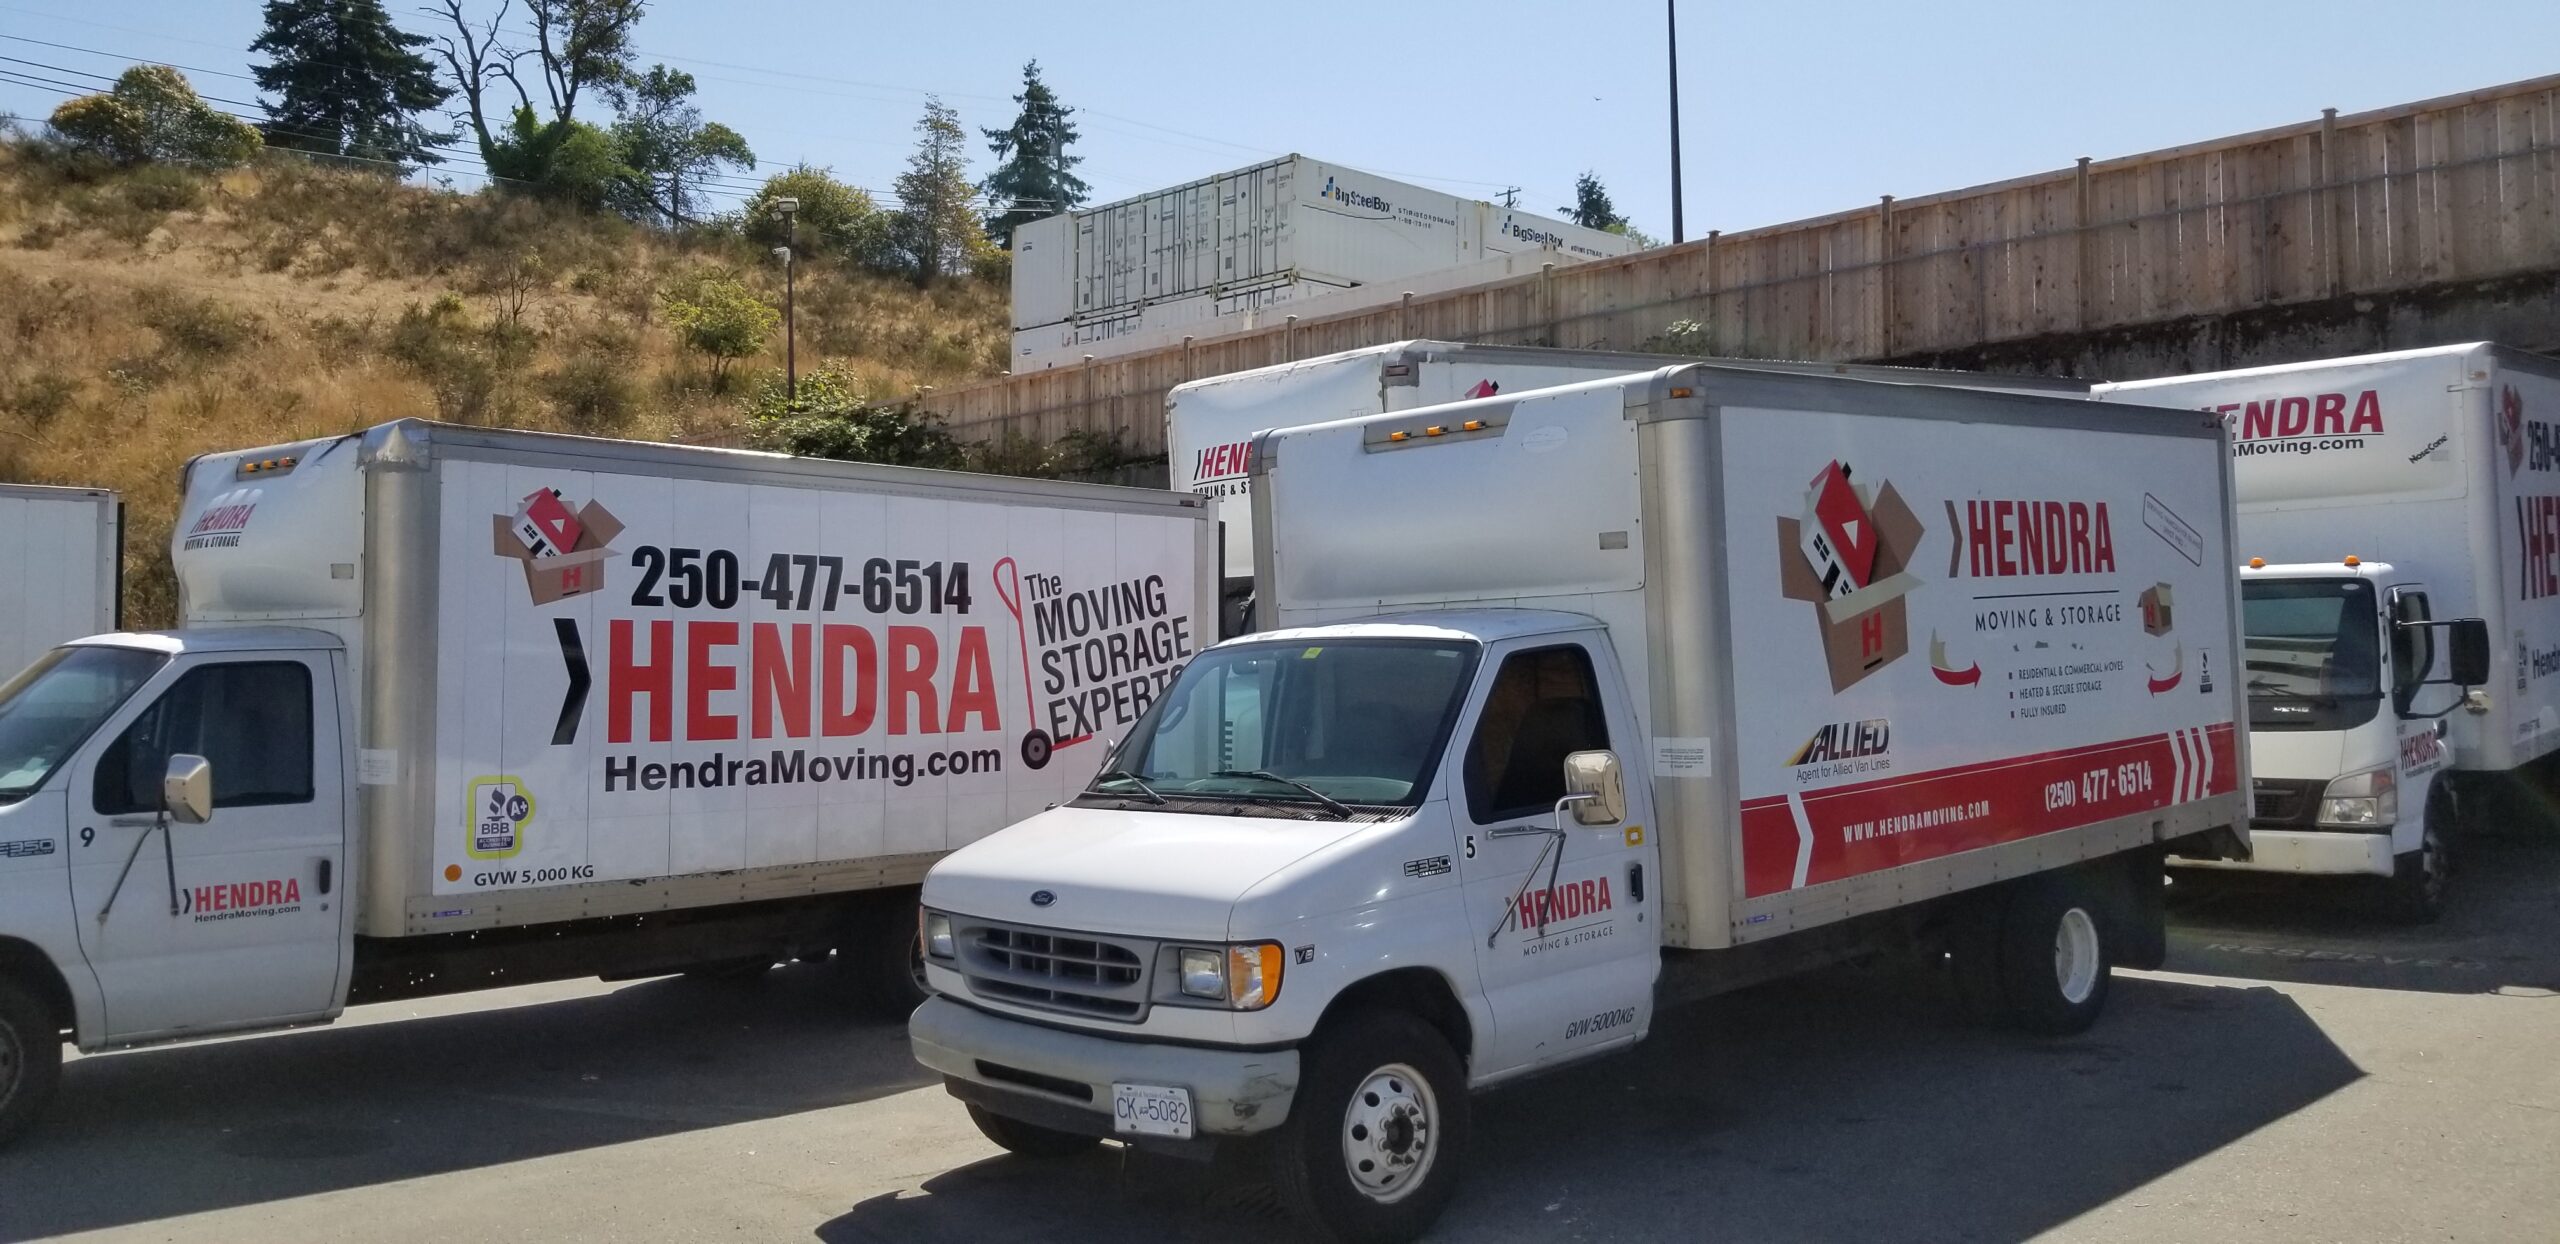 Hendra Moving trucks on the road